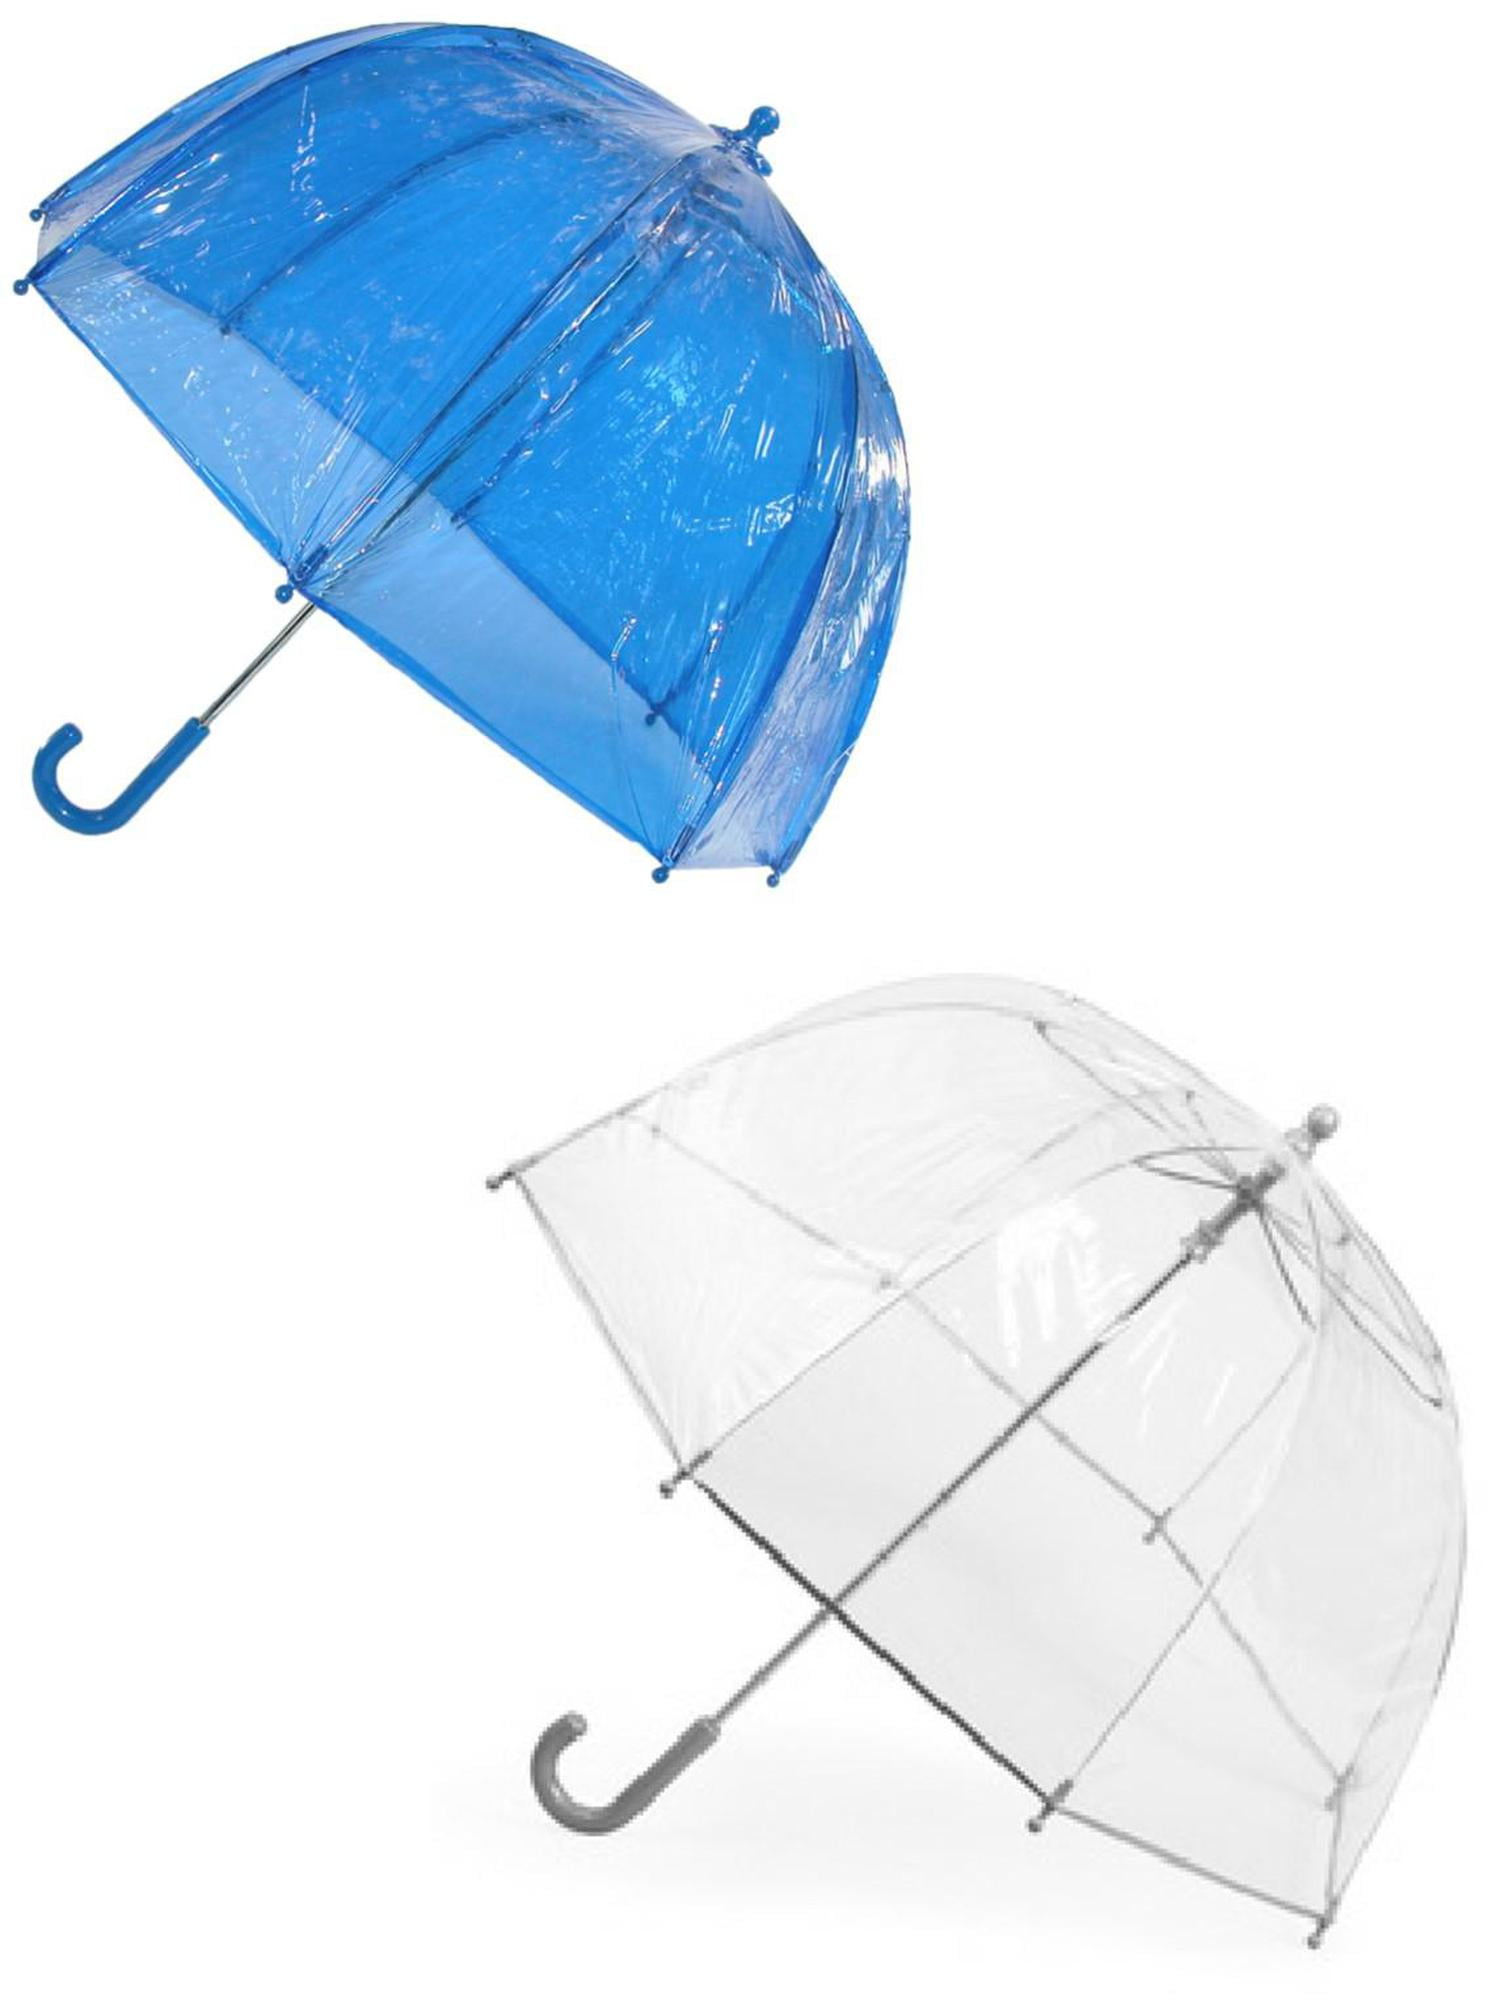 46 Clear Bubble Umbrella Manual Open Fashion Dome Shaped European Hook Handle 6 Pack 